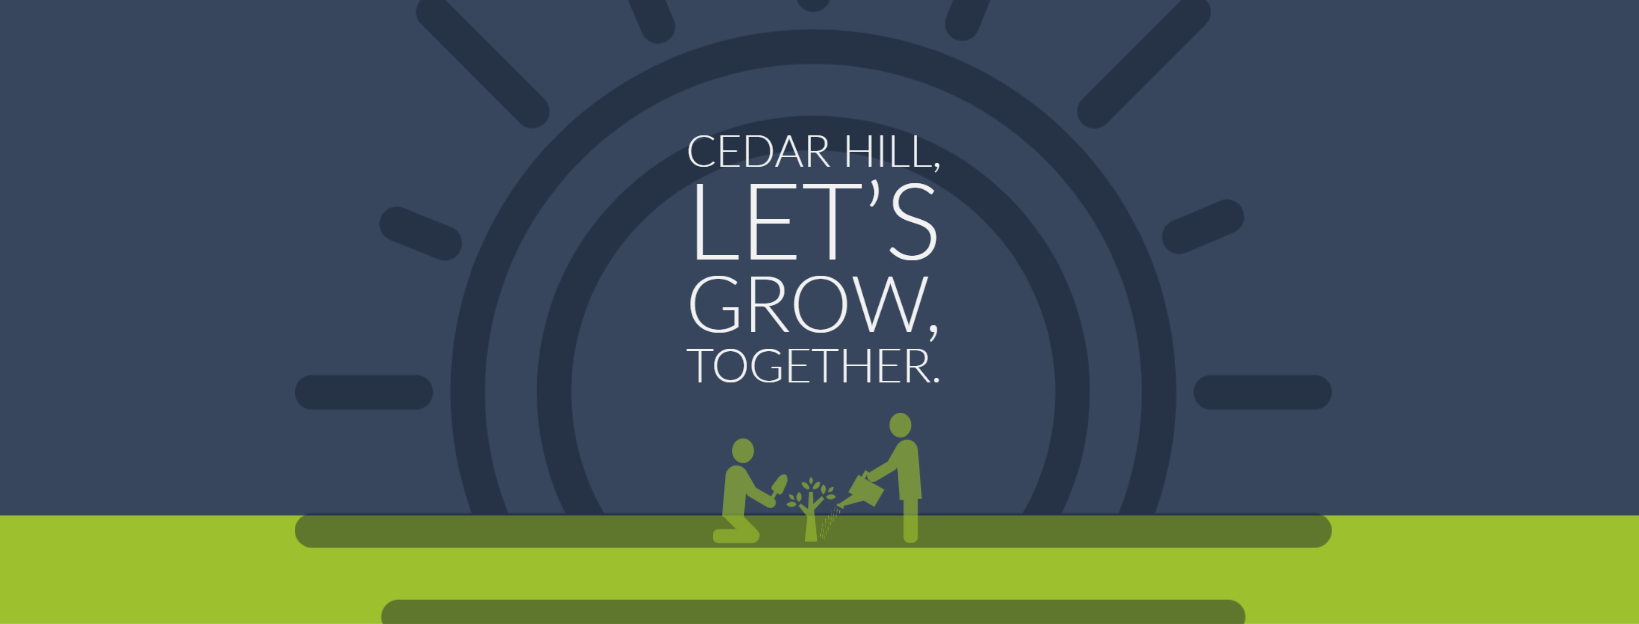 Cedar Hill Economic Development Corporation Cover